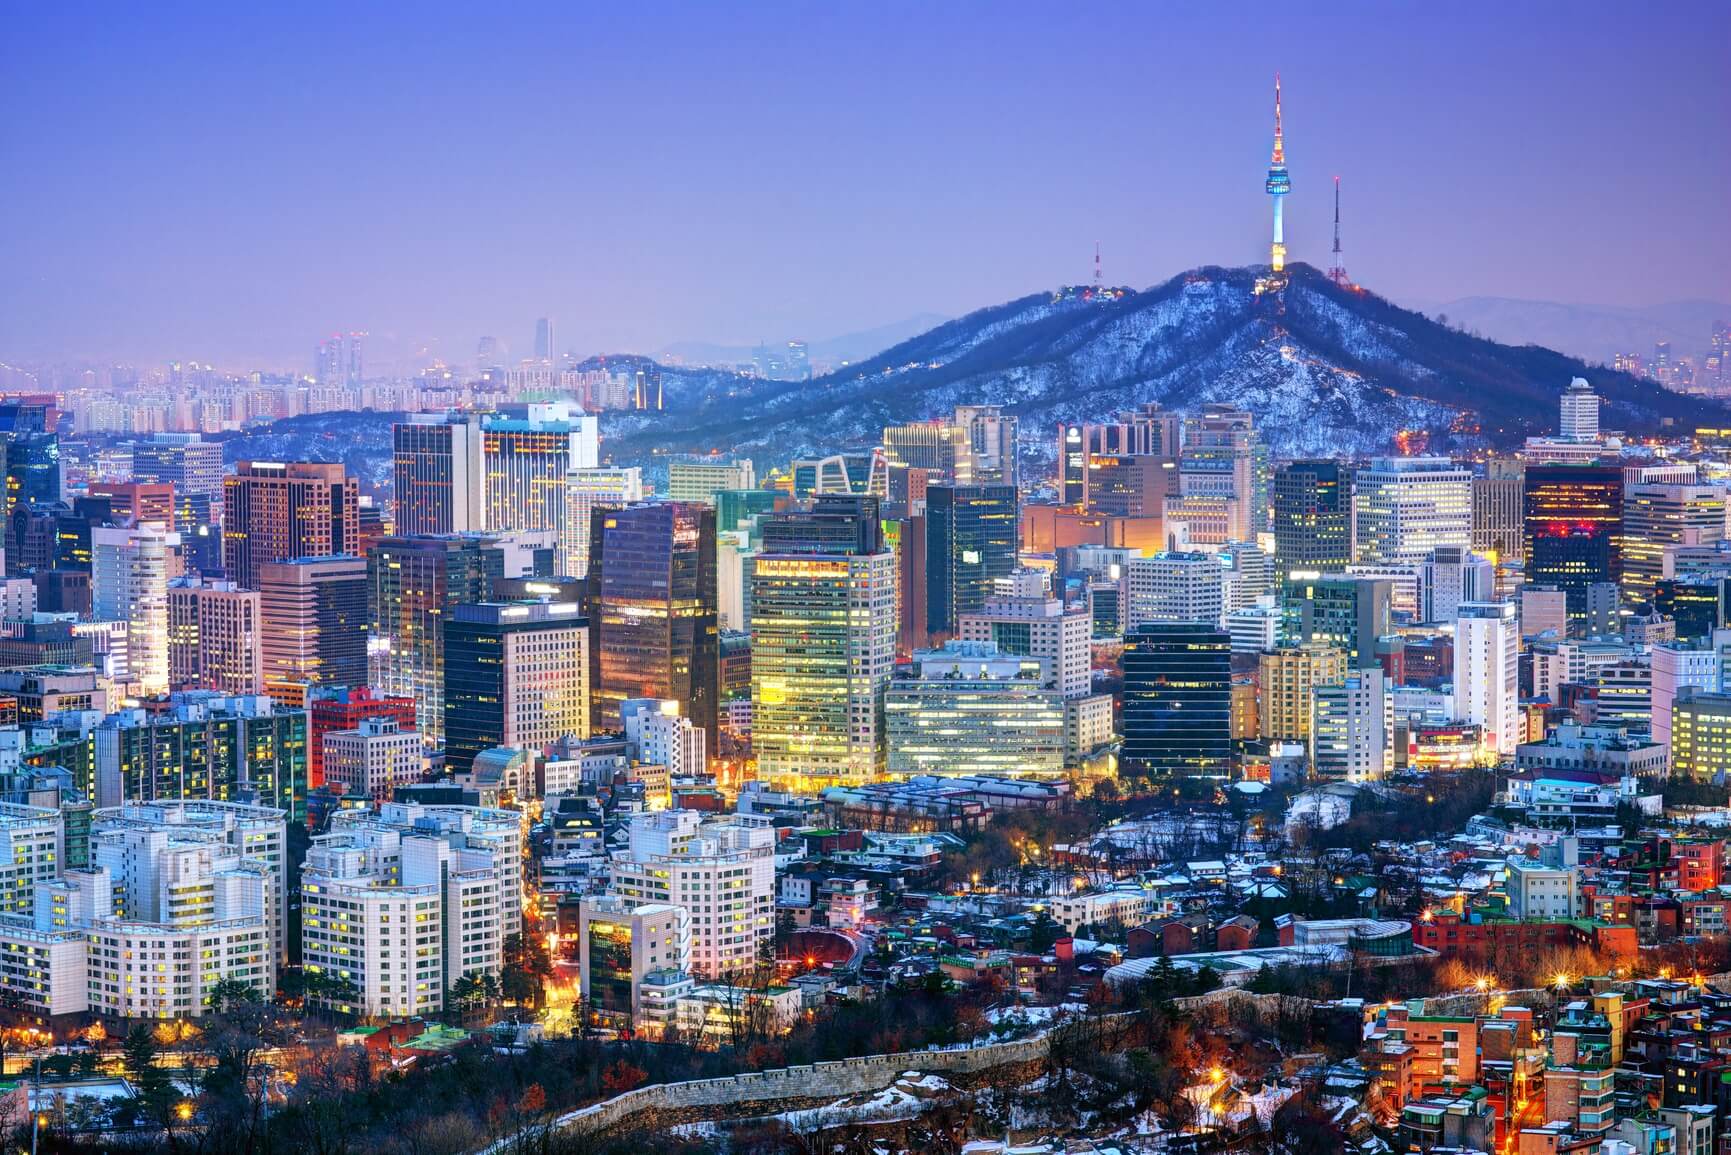 Flight deals from San Francisco to Seoul, South Korea | Secret Flying